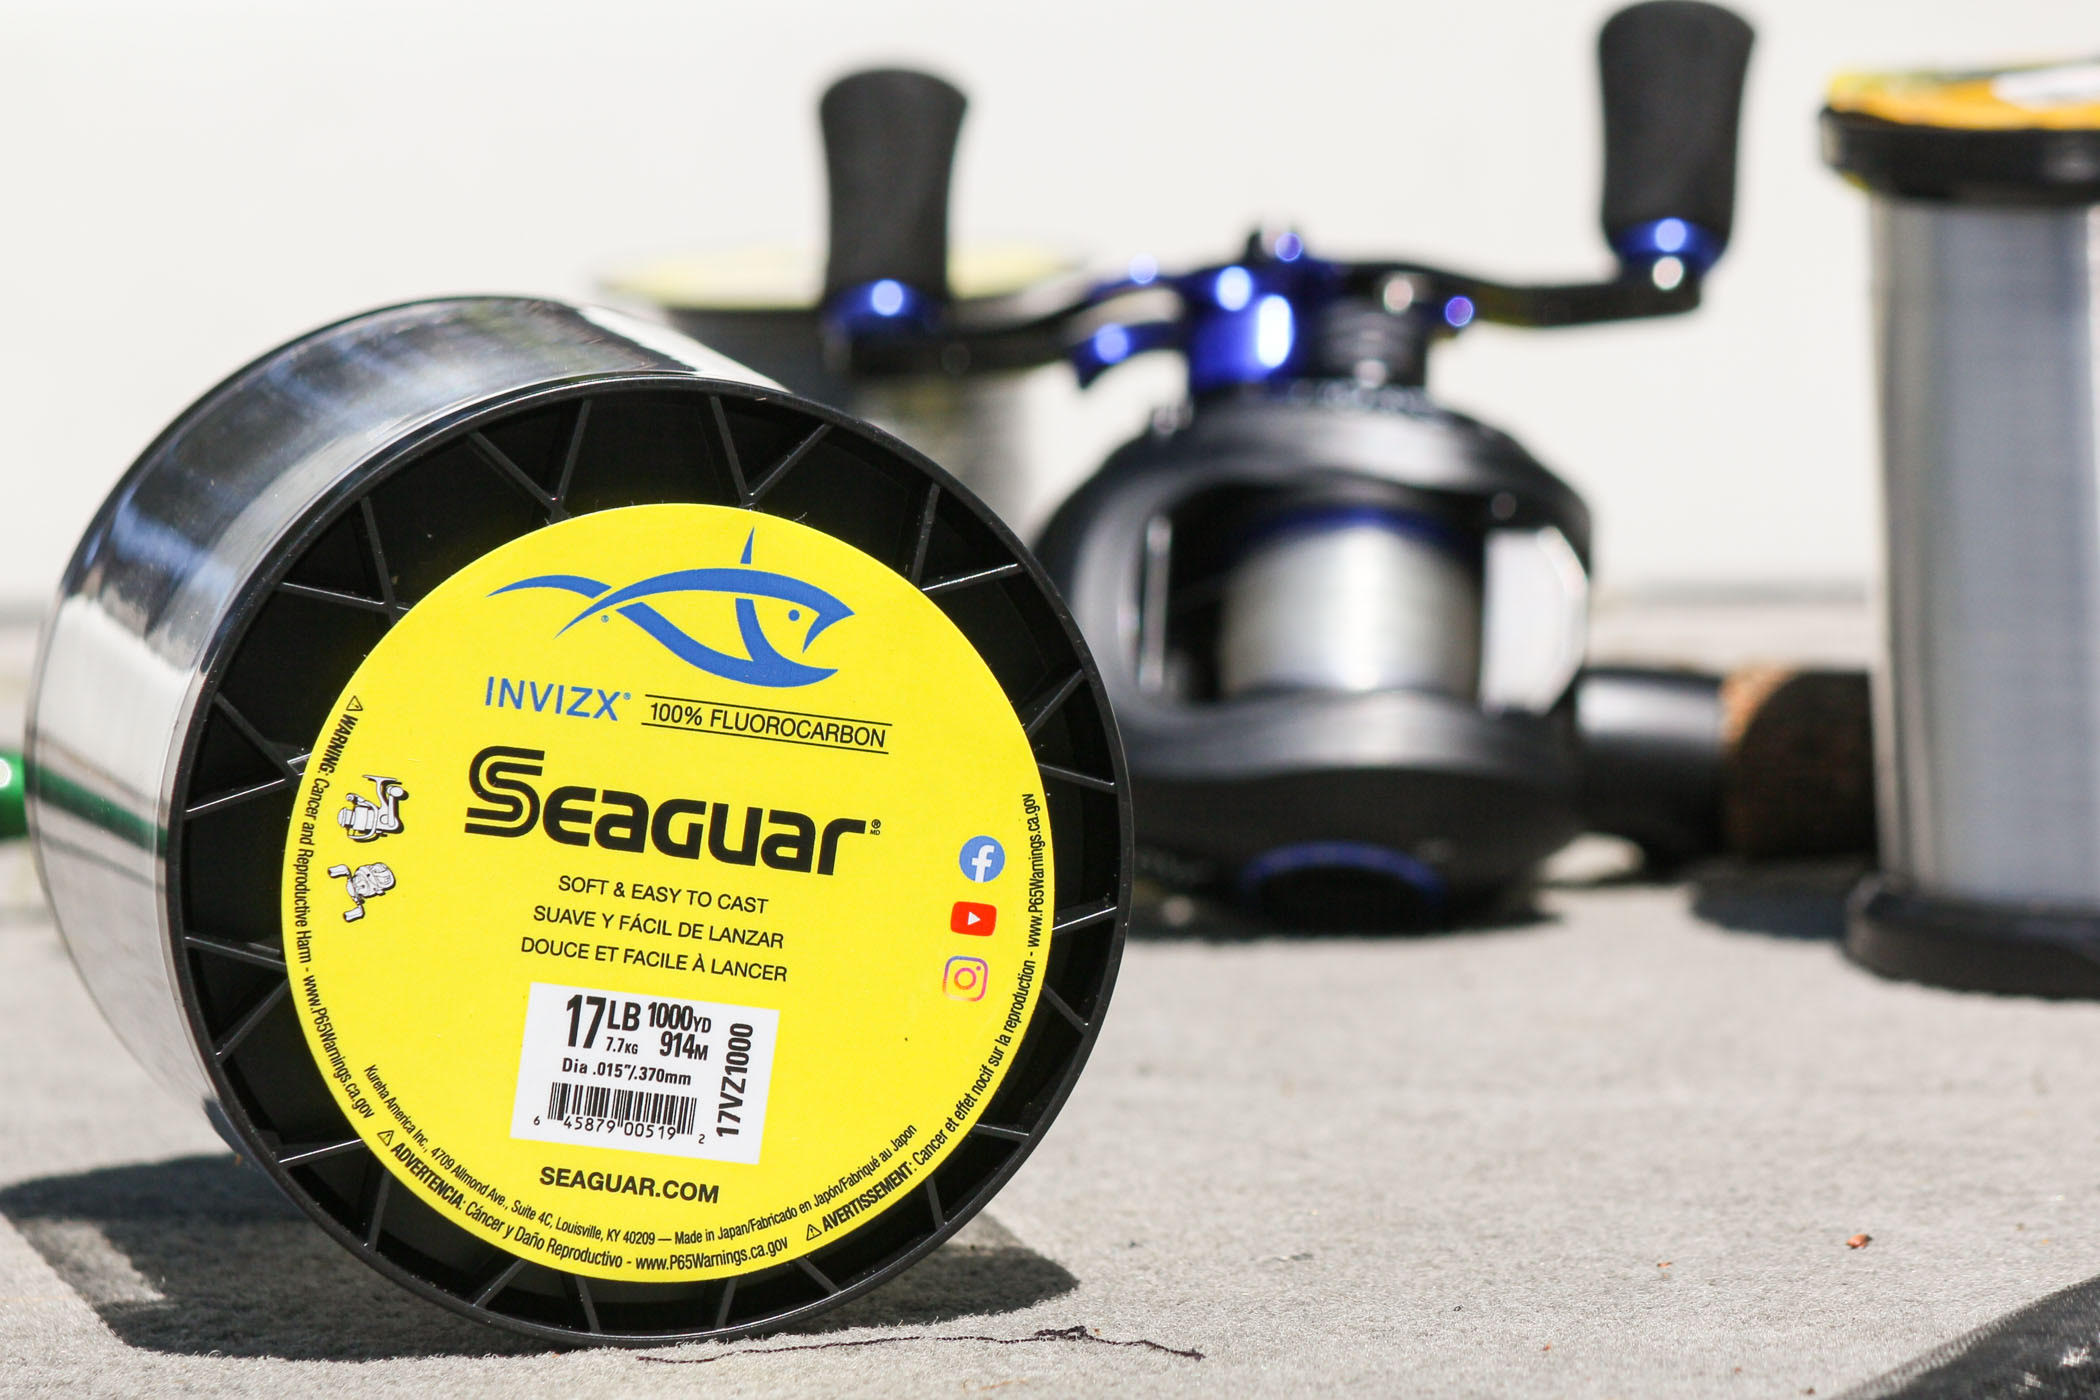 Seaguar INVIZX Fluorocarbon Fishing Line 1000 Yards